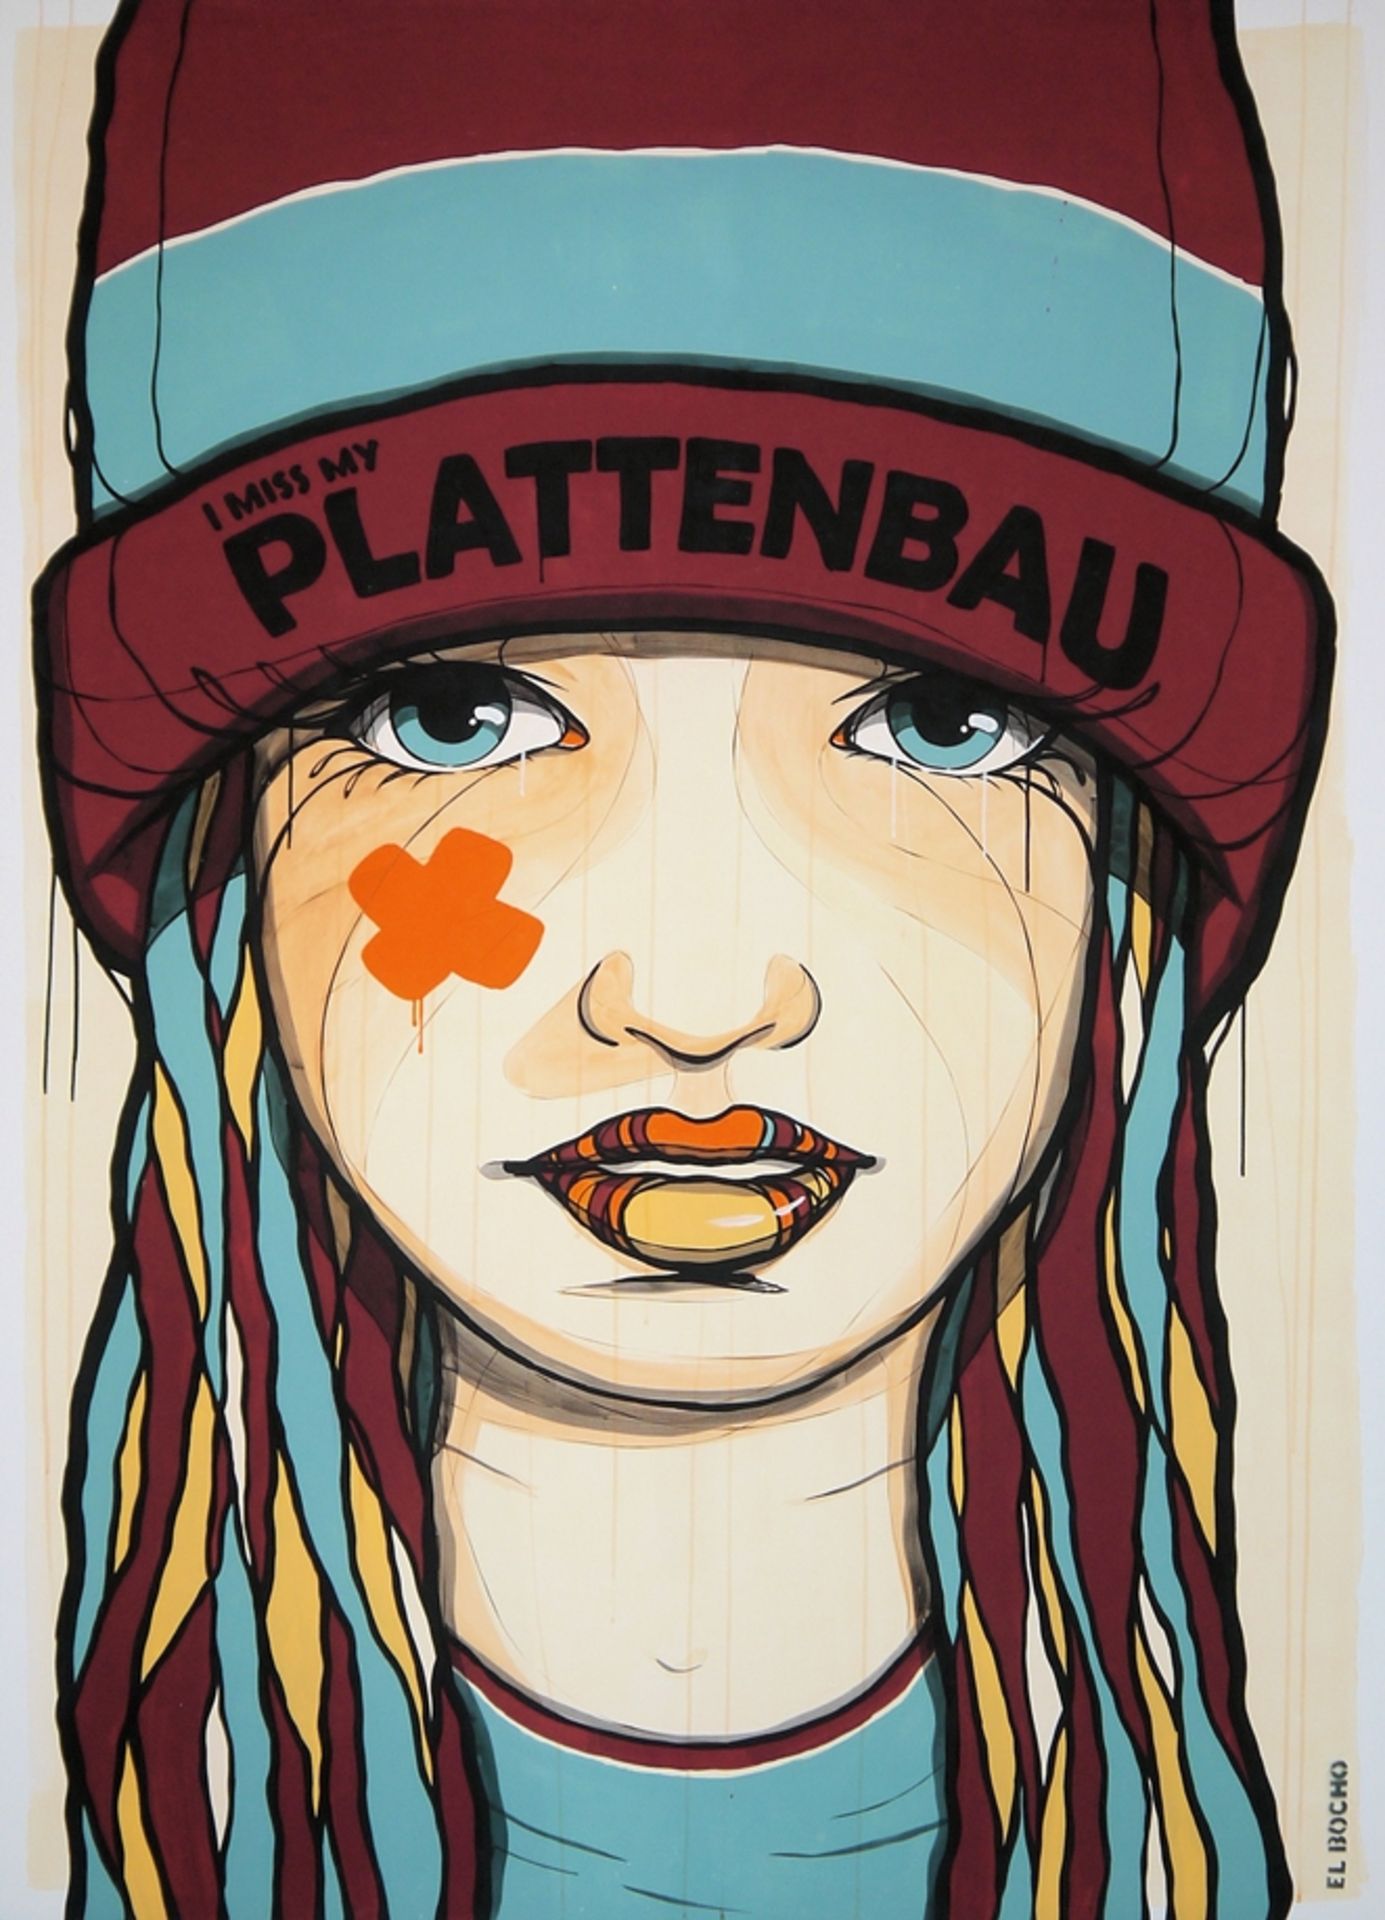 El Bocho, "I miss my Plattenbau", signed fine art print